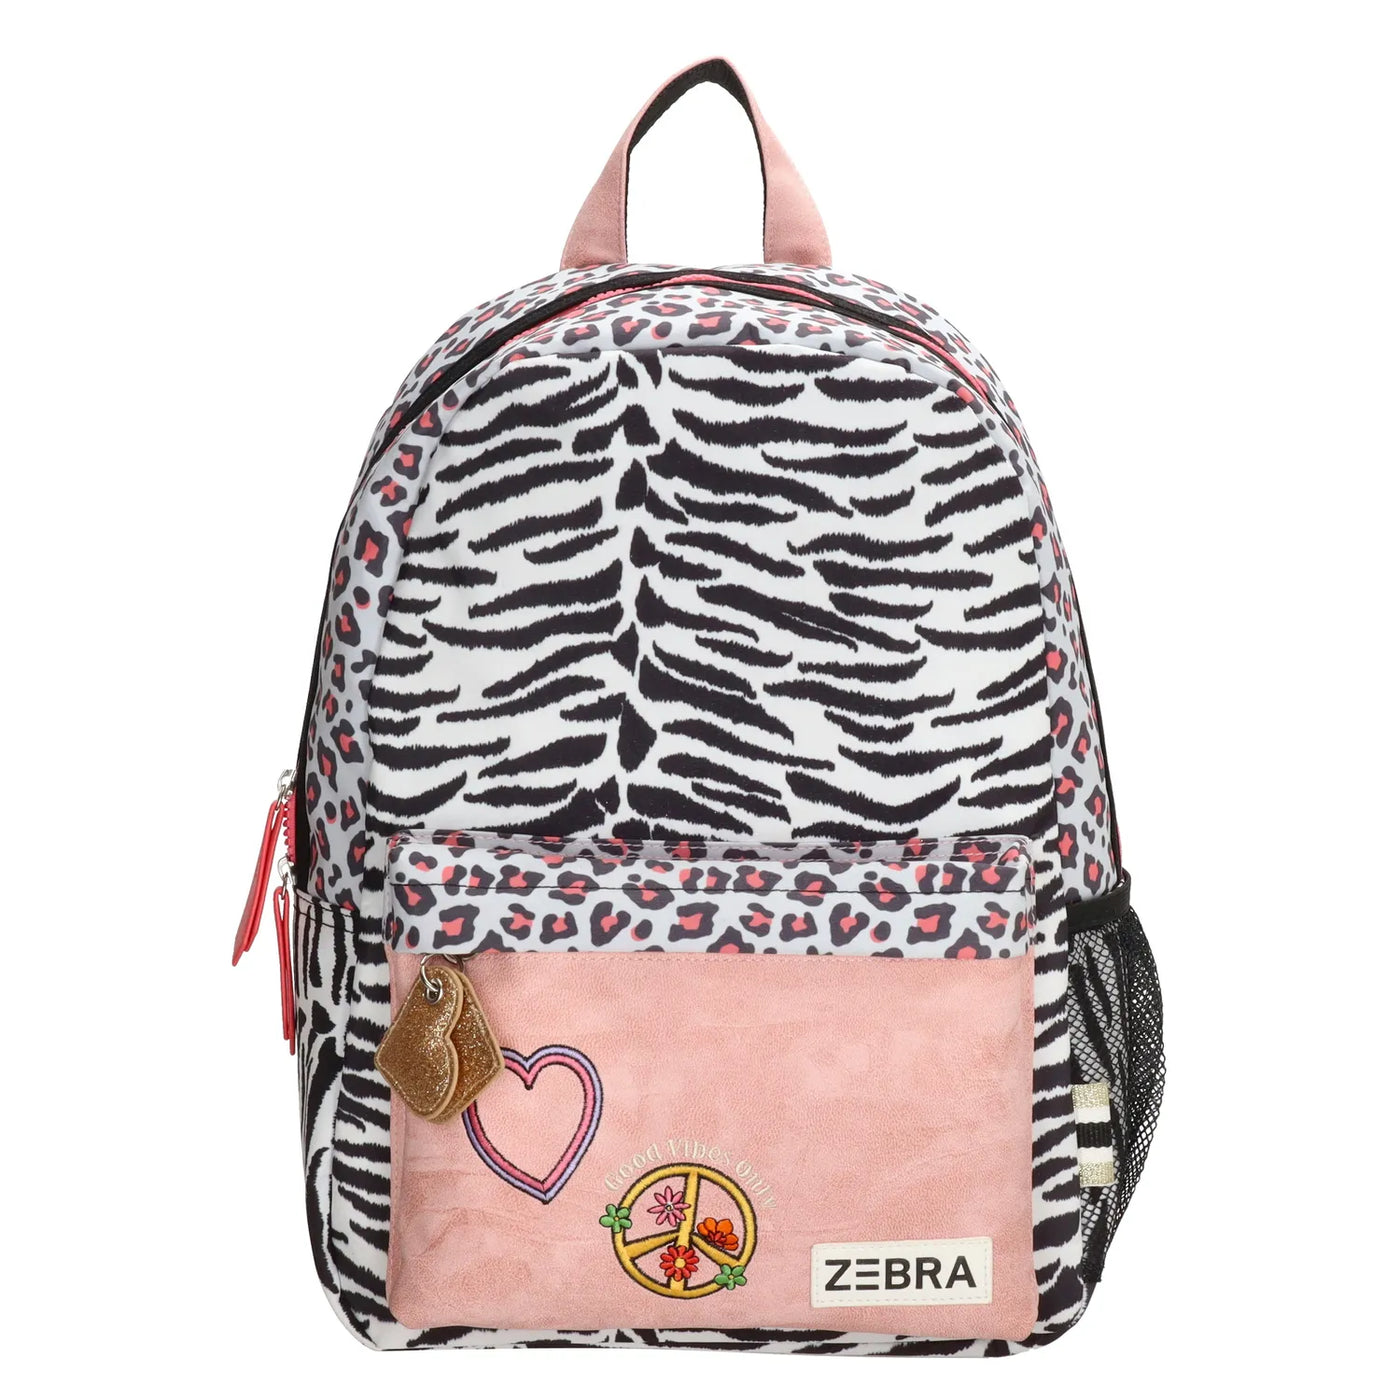 Zebra girls rugzak Tiger Leopard wit/roze 20768930